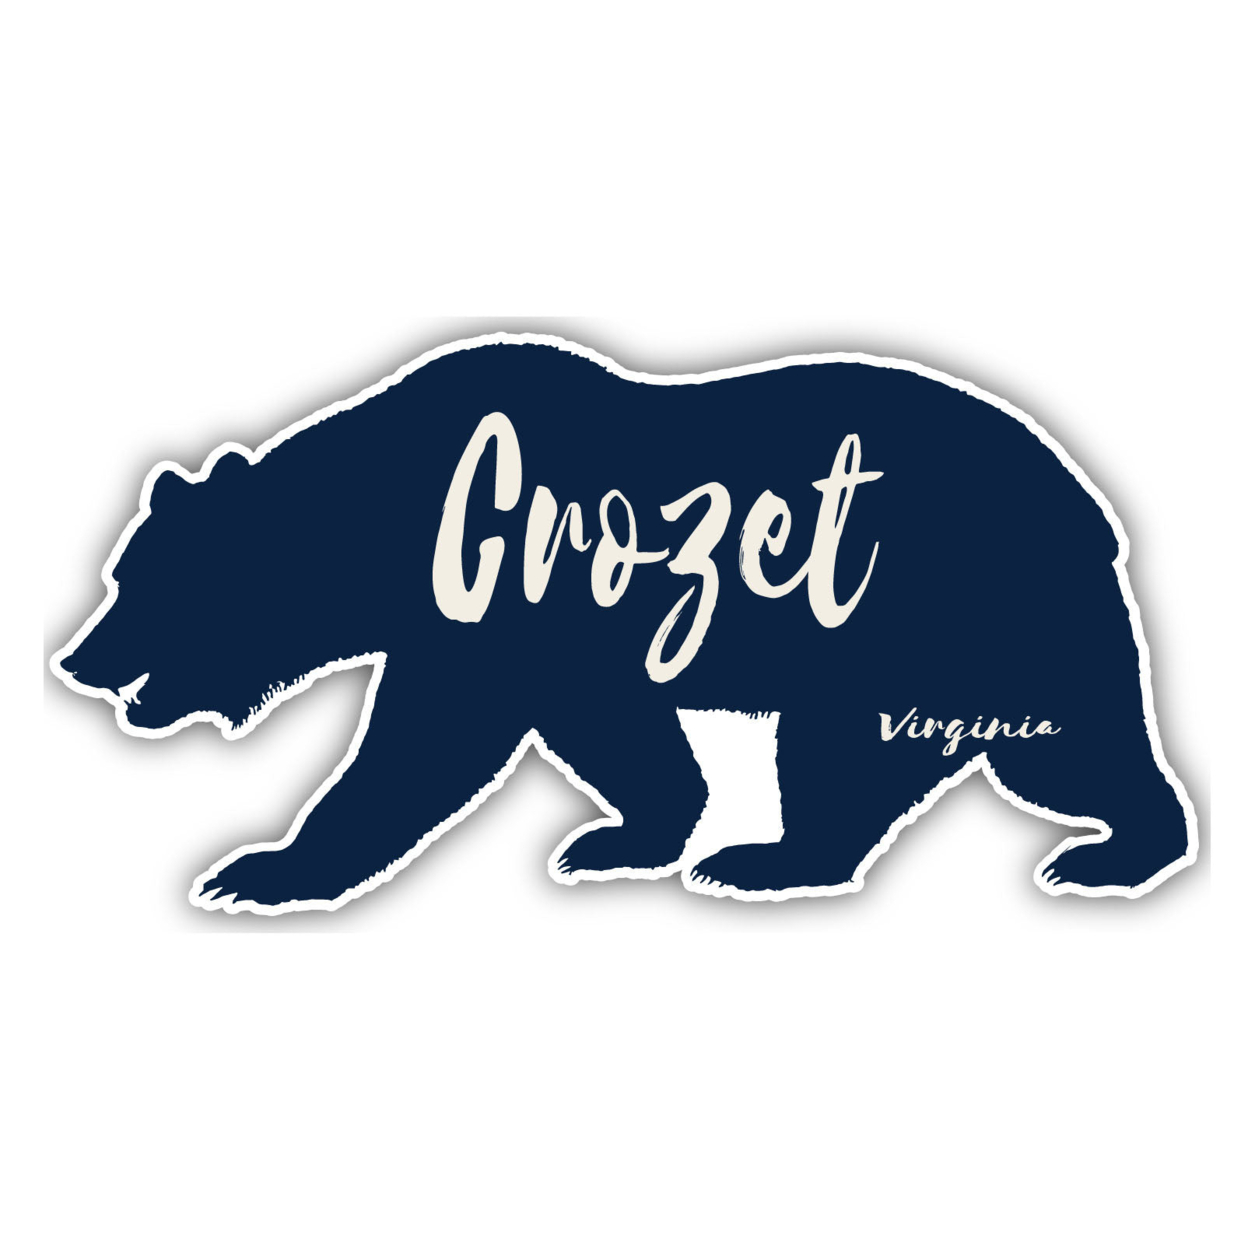 Crozet Virginia Souvenir Decorative Stickers (Choose Theme And Size) - Single Unit, 2-Inch, Bear